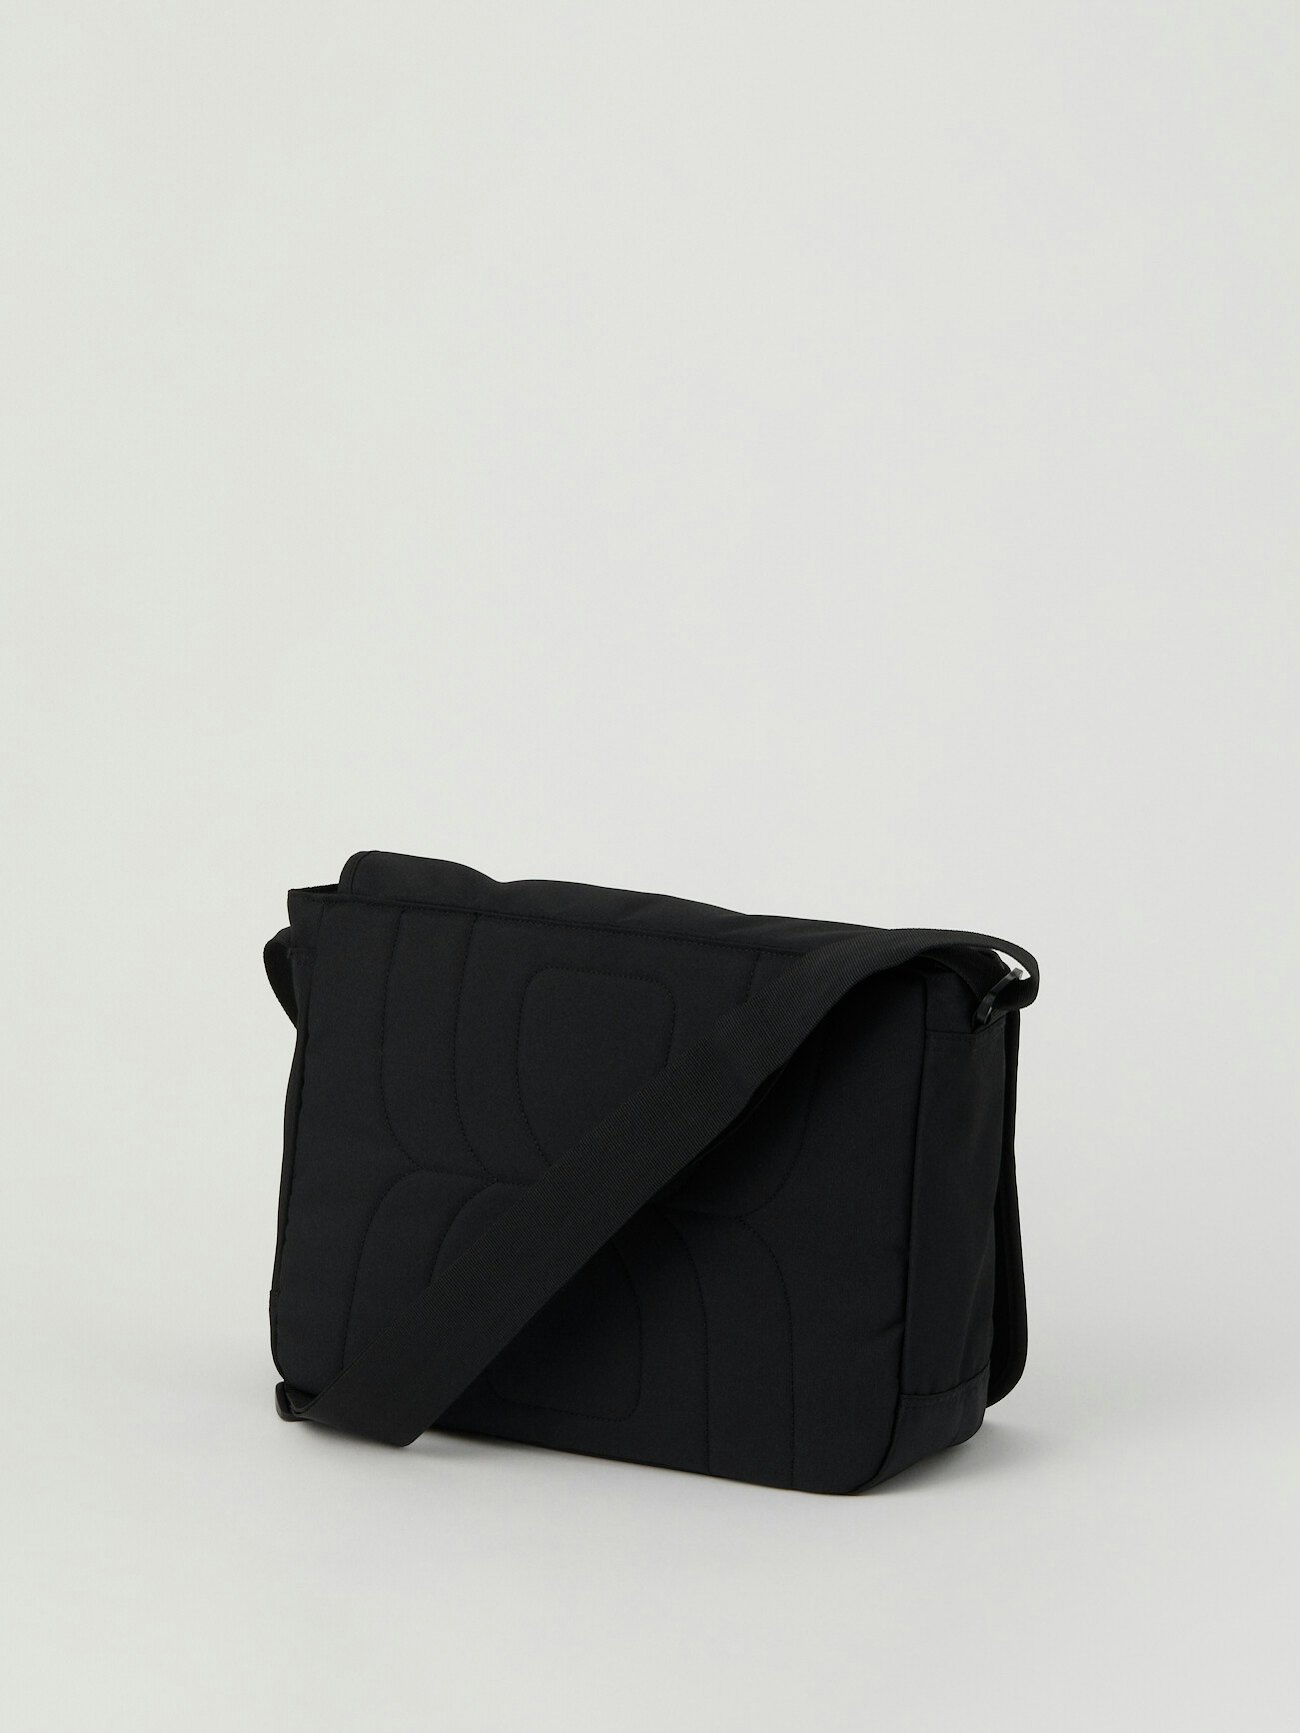 Bottega Veneta Mini Loop Bag 1 Year Review, Wear & Tear